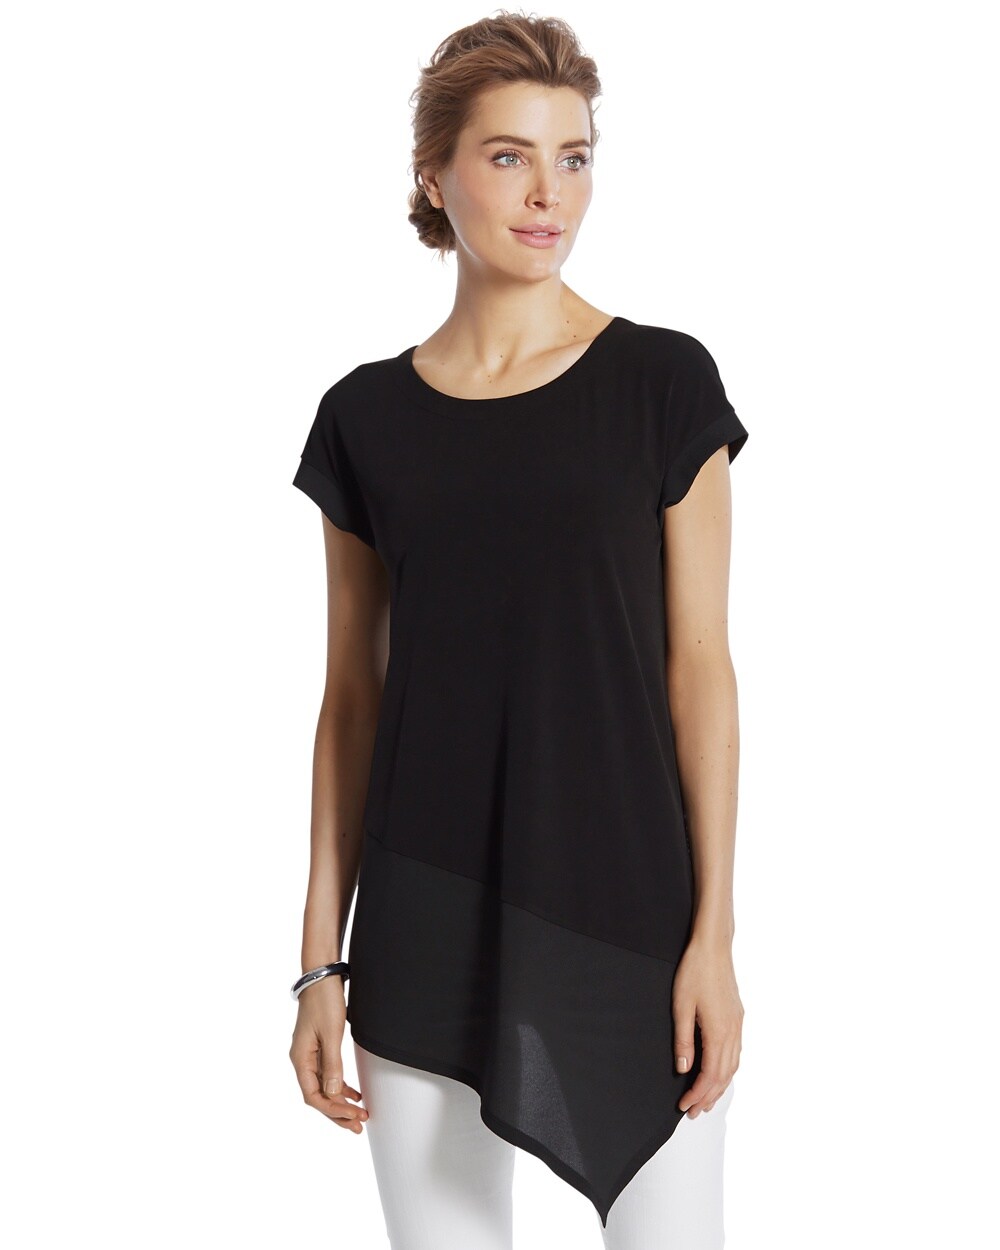 Angled Hem Black Top - Women's New Clothing - Tops, Bottoms ...